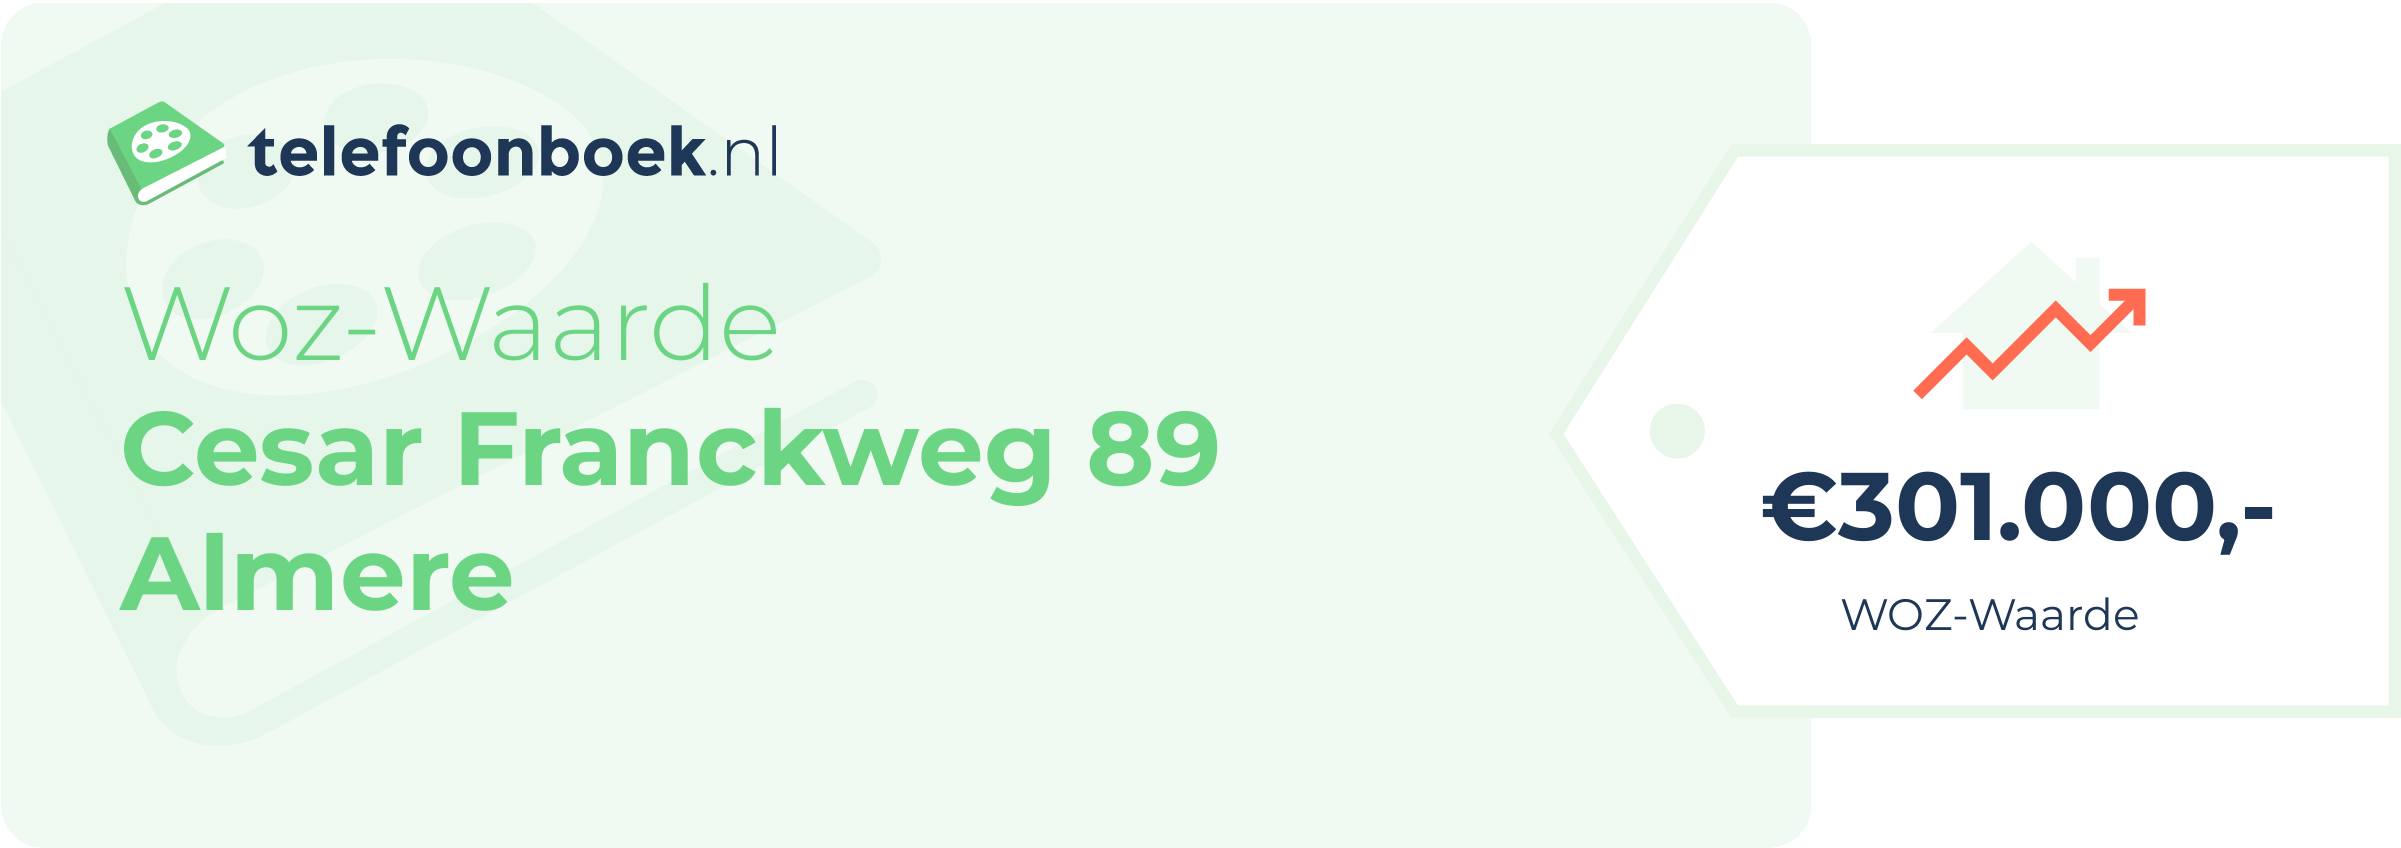 WOZ-waarde Cesar Franckweg 89 Almere